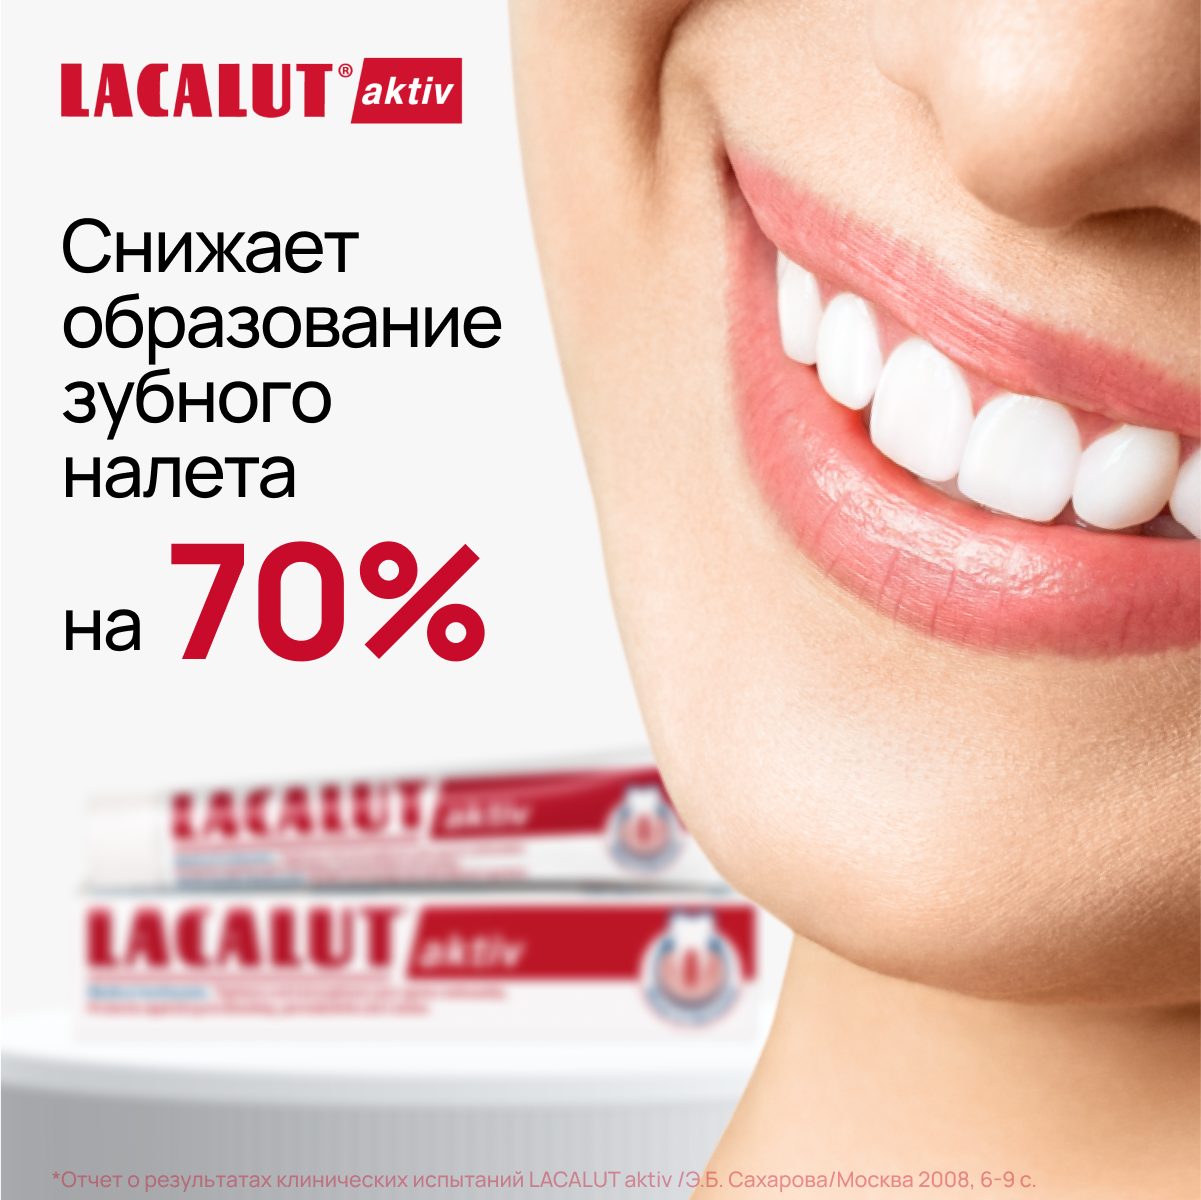 Lacalut aktiv зубная паста, набор 75 х 2 шт